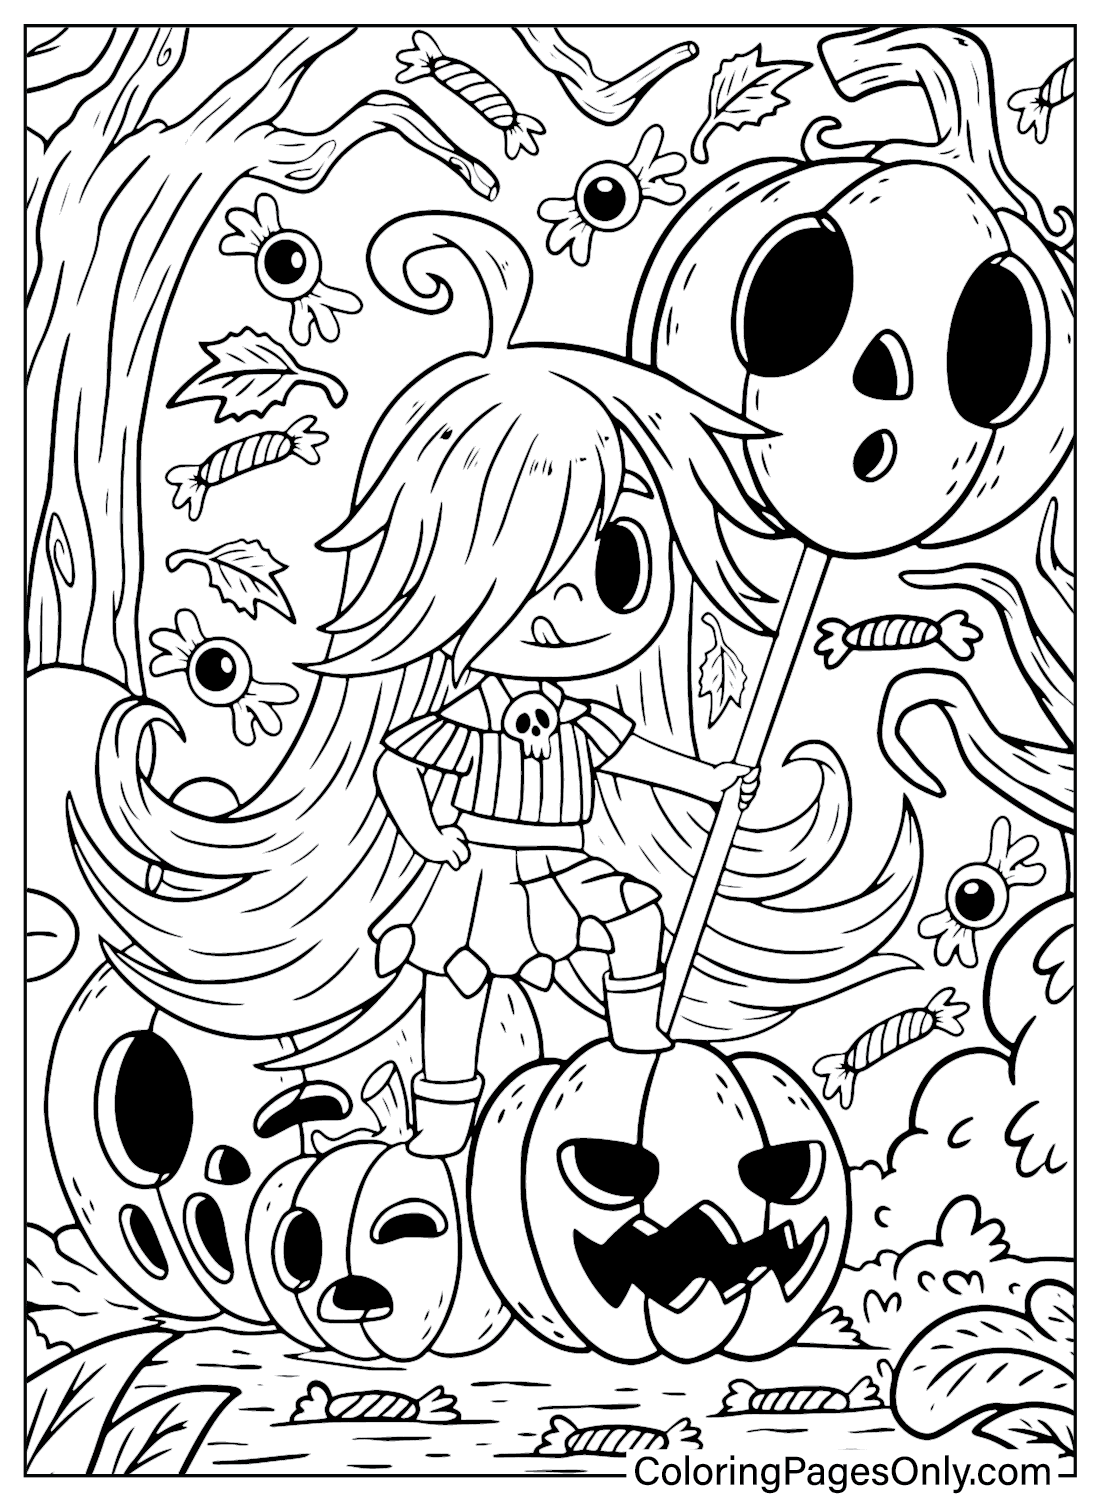 Spooktacular Halloween Coloring Sheet for Kids from Spooktacular Halloween